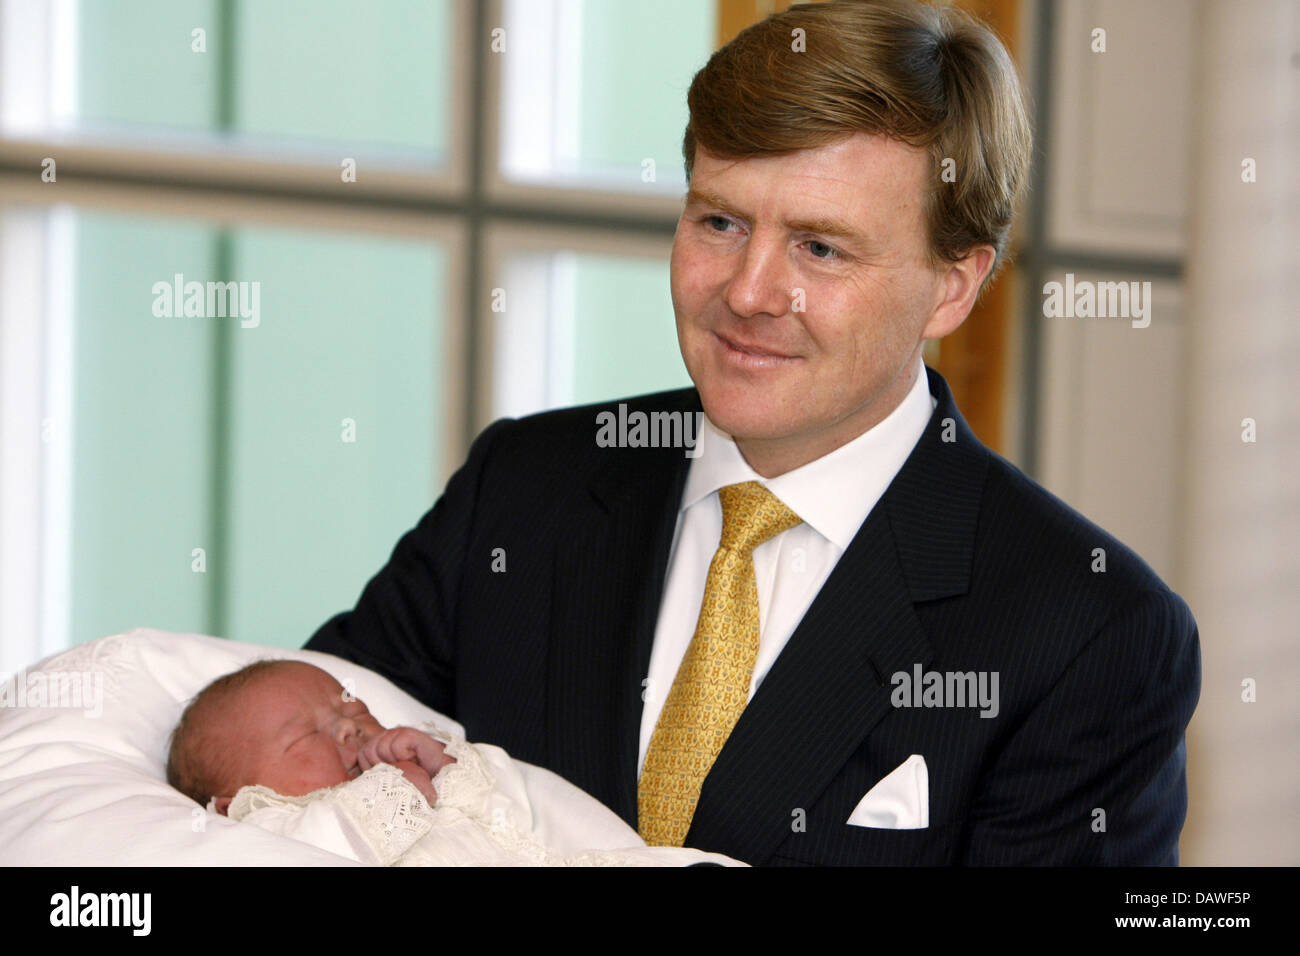 dutch-prince-willem-alexander-presents-his-third-daughter-as-yet-unnamed-DAWF5P.jpg